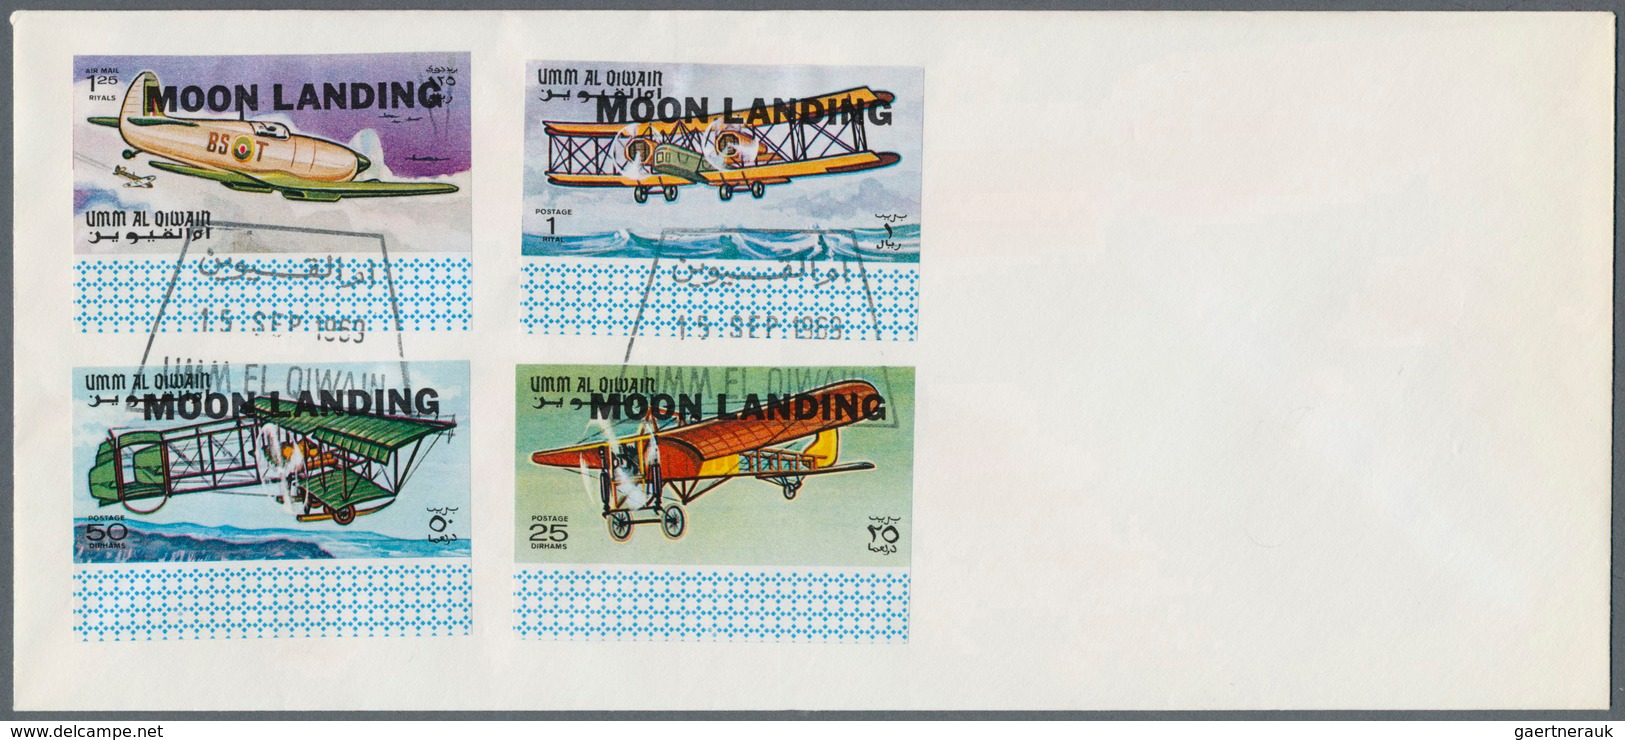 Thematik: Raumfahrt / astronautics: 1969, Umm al Qaiwain, "APOLLO 11" - "MOON LANDING" - "NEIL ARMST